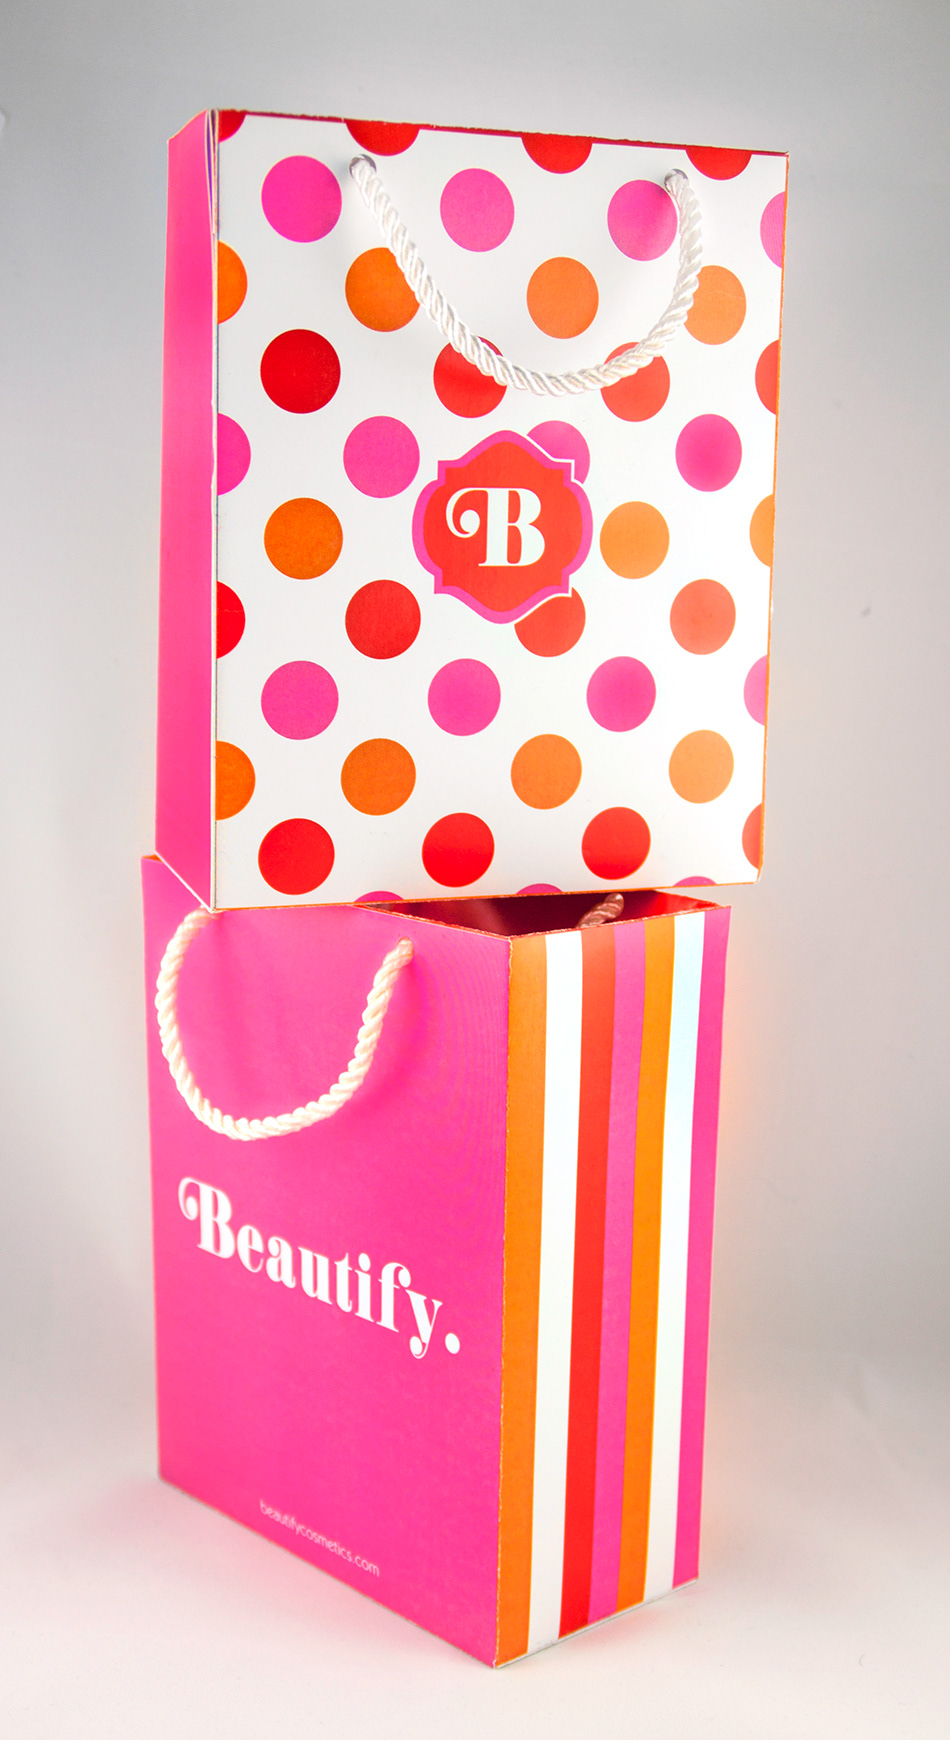 #shoppingbag #shoppingbagdesign #Design #cosmetics #makeup  #pink #colorful #polkadots #stripes #FunDesign #girlydesign #womandesign #hipdesign